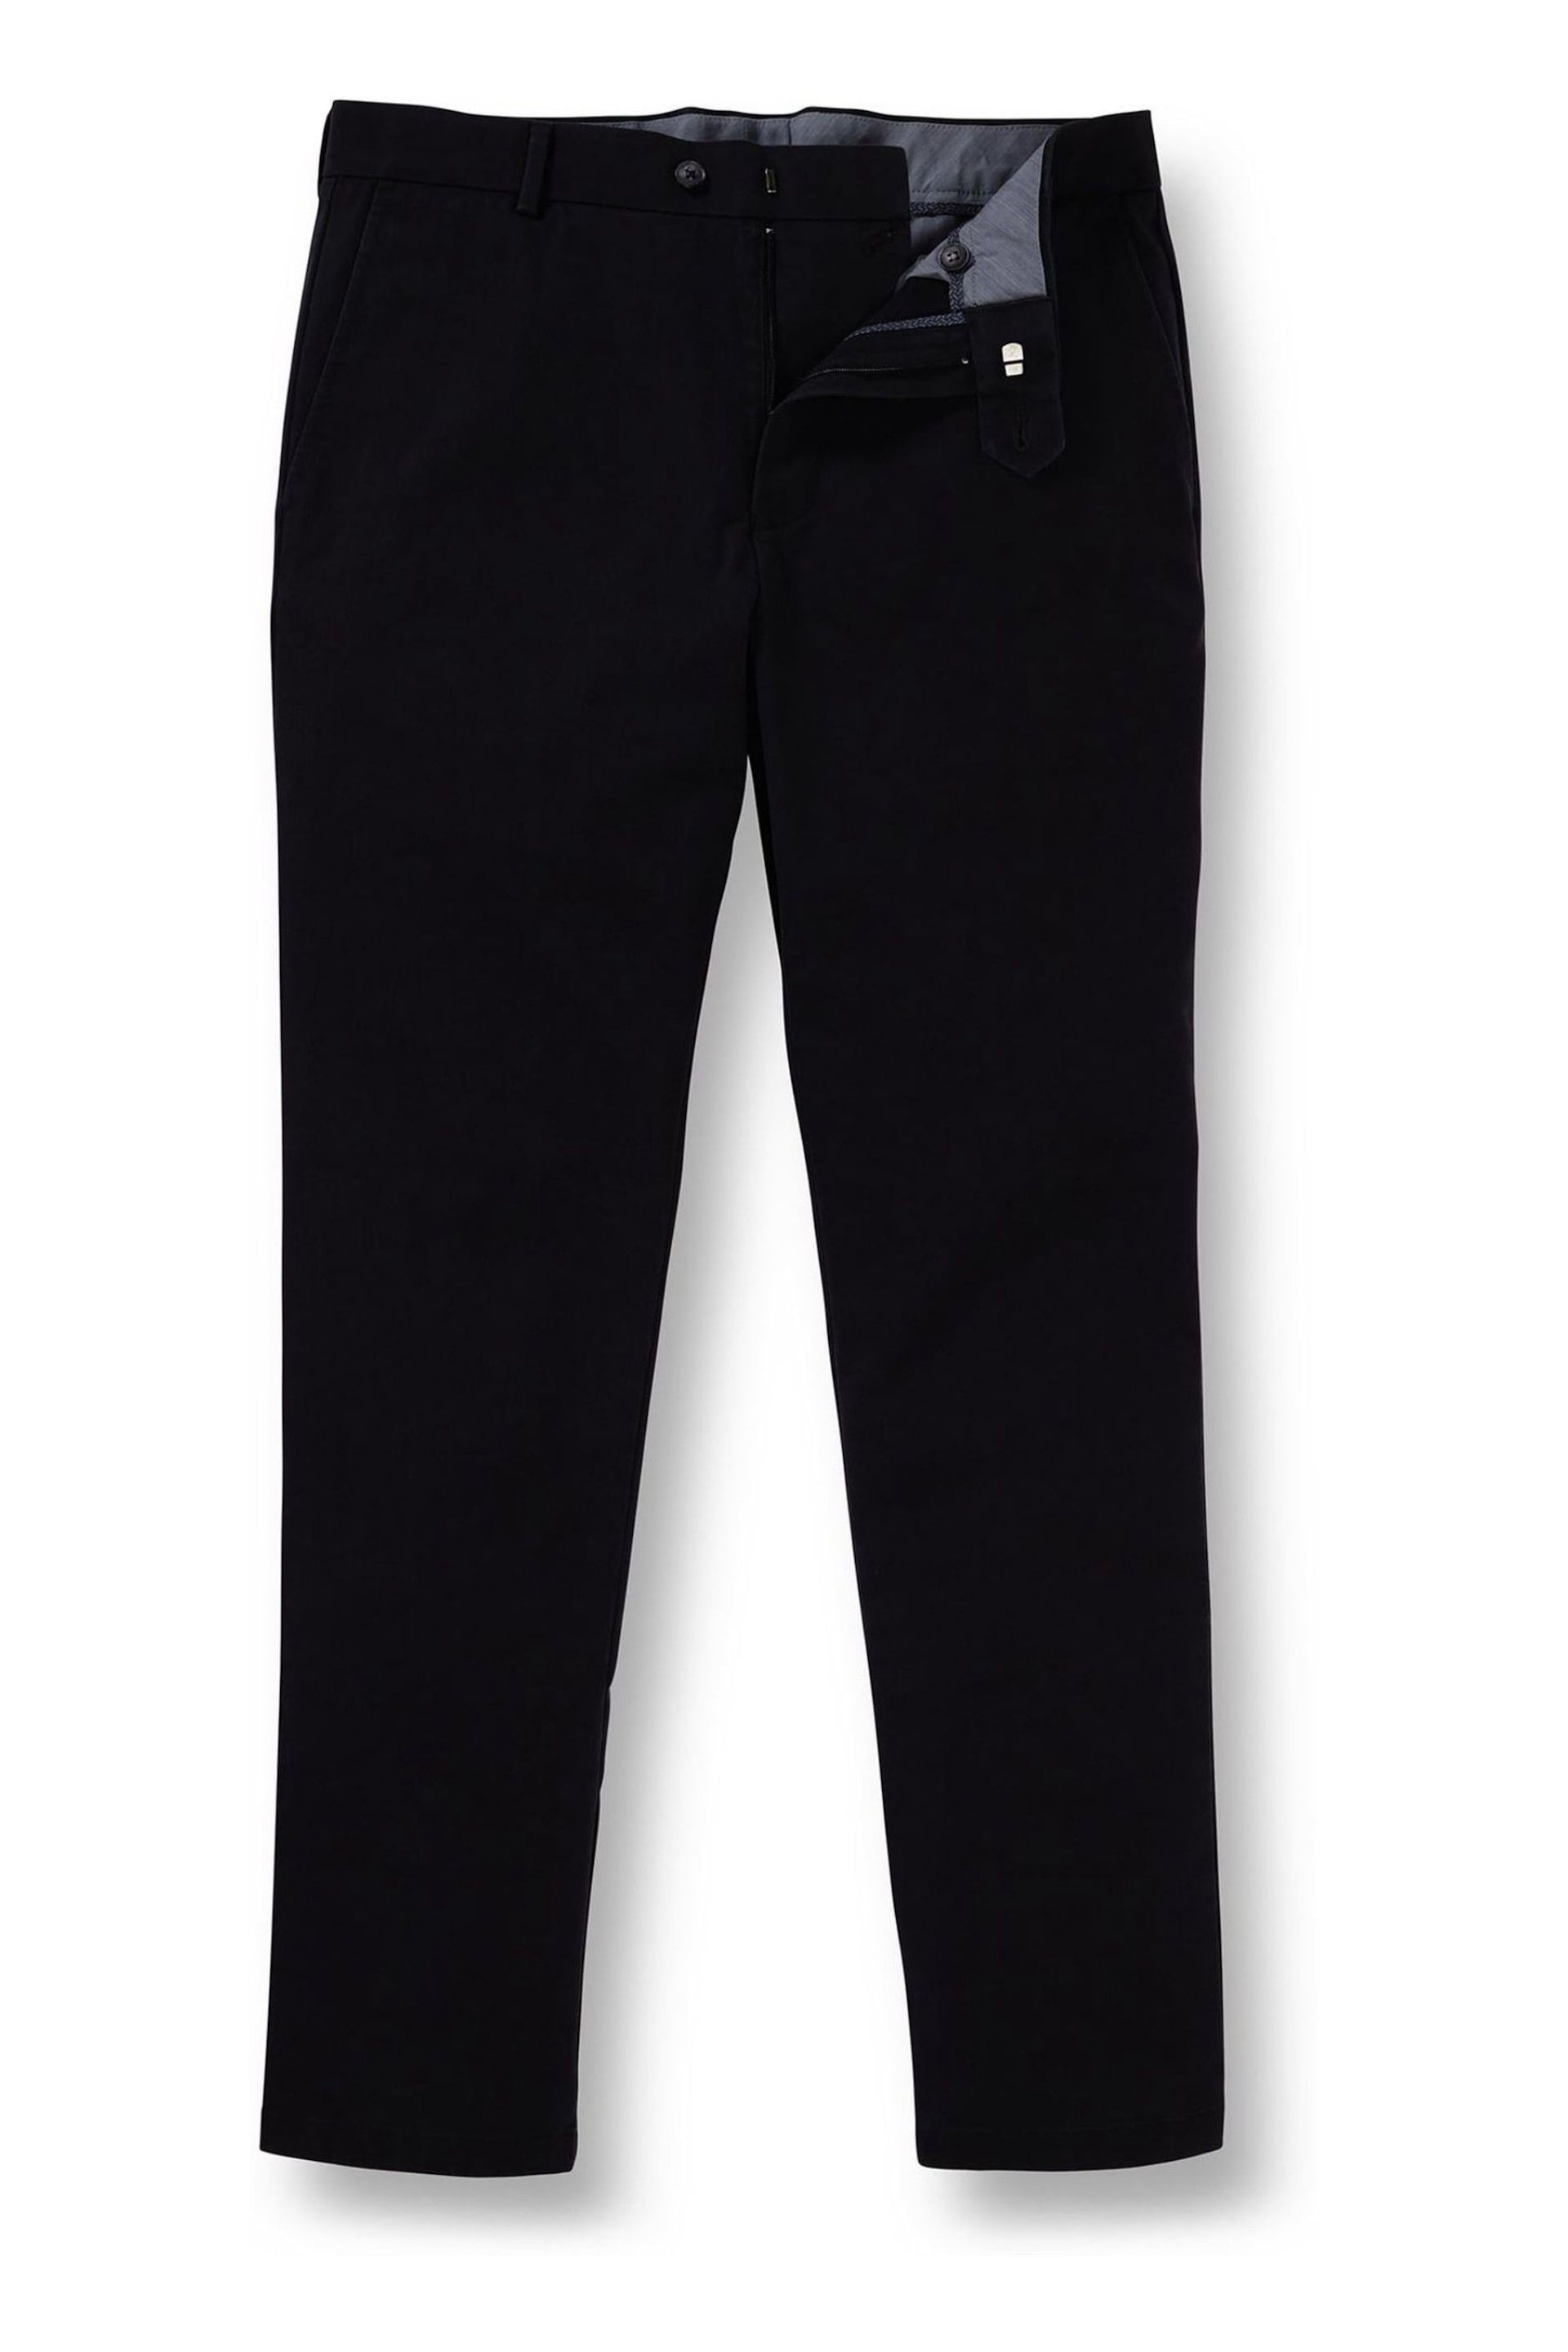 Charles Tyrwhitt Dark black Classic Fit Ultimate non-iron Chino Trousers - Image 4 of 5